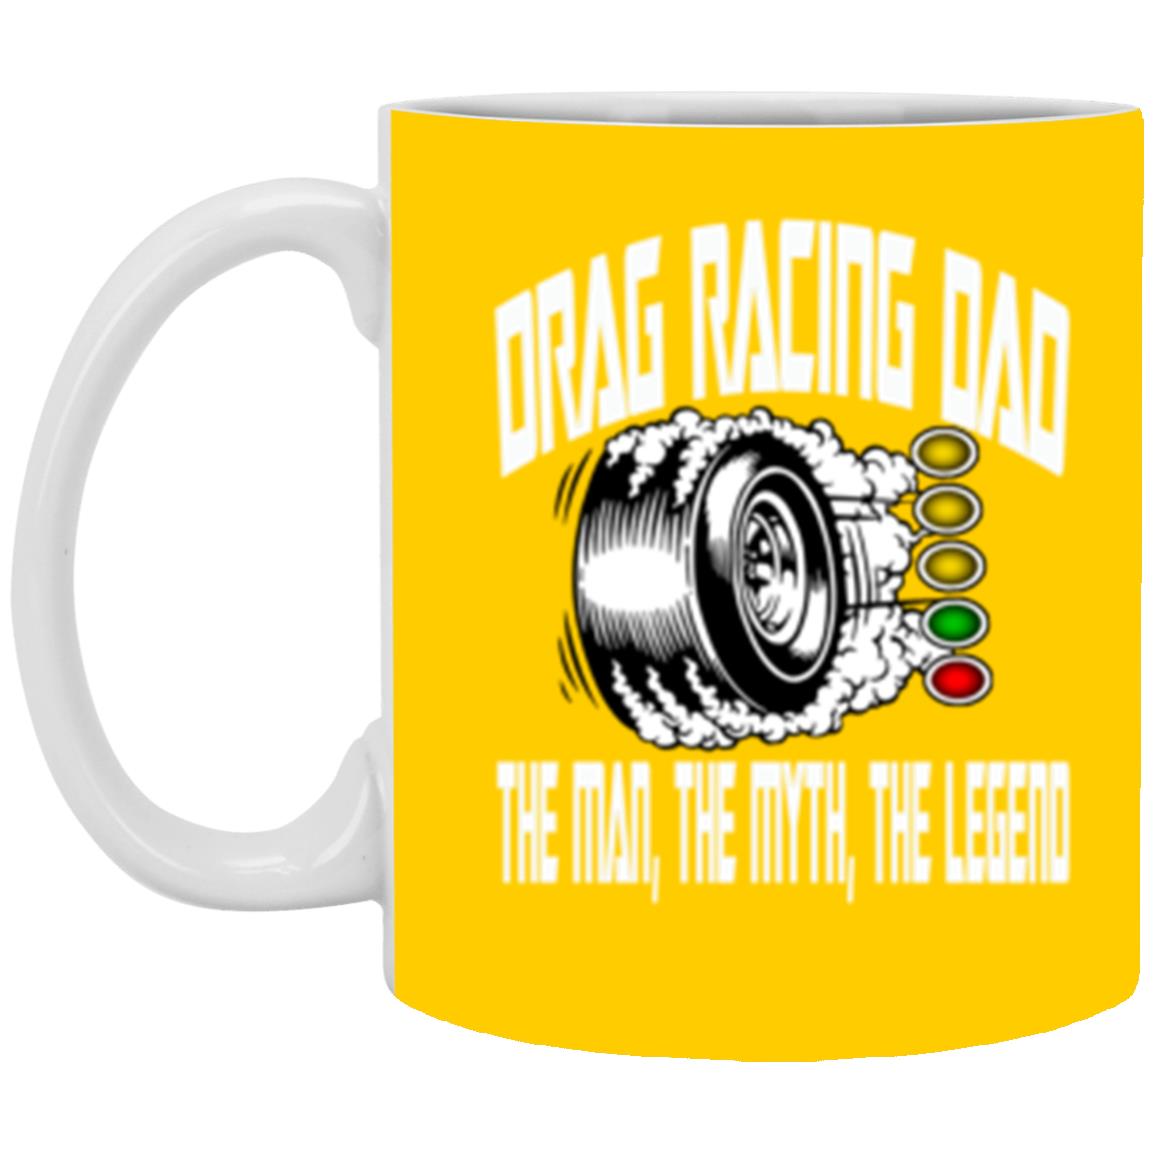 Drag Racing Dad 11 oz. White Mug